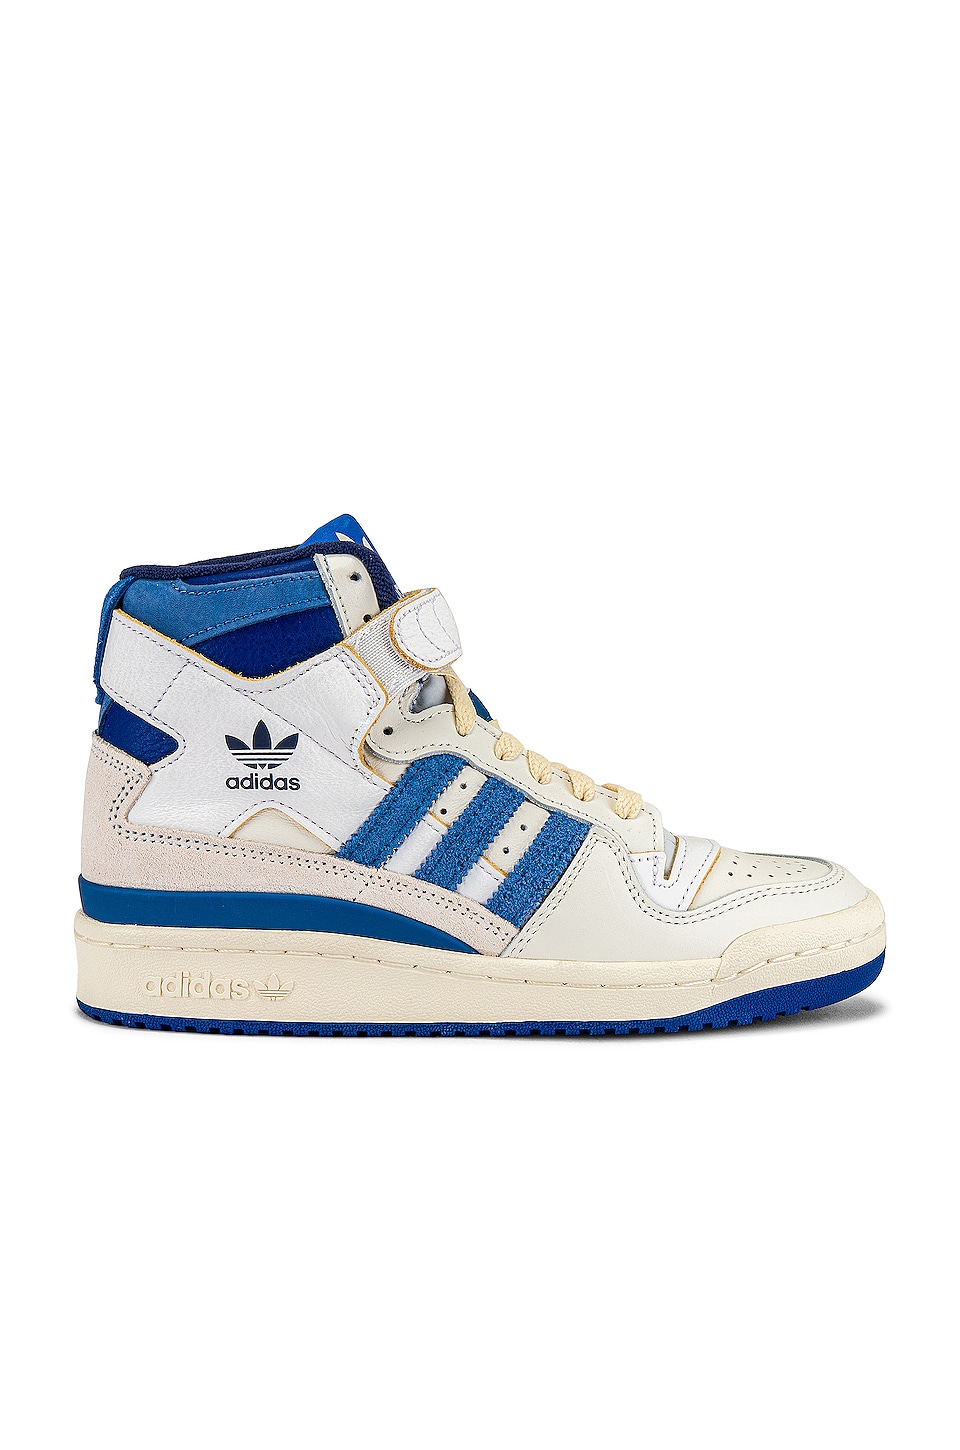 adidas Originals Forum 84 High Sneaker in Off White & Bright Blue | REVOLVE